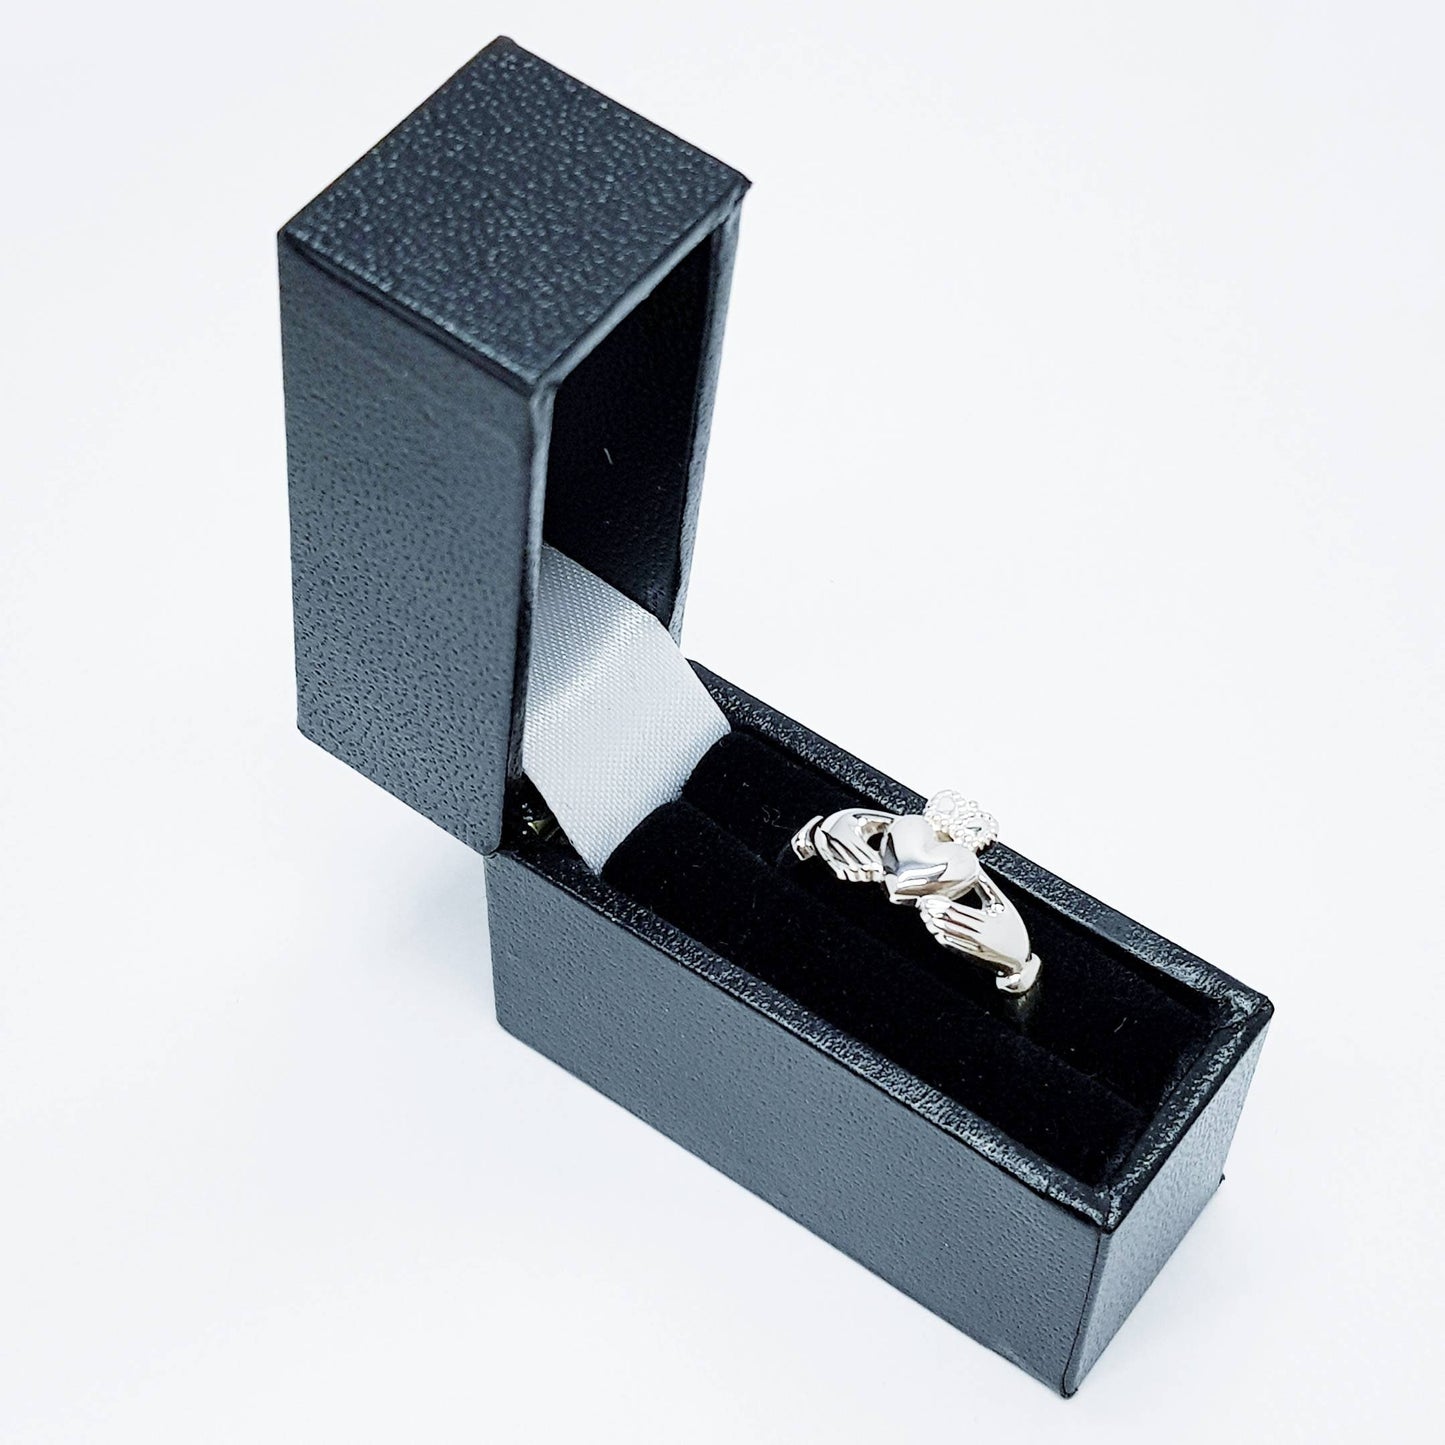 Sterling Silver Claddagh ring, Irish Claddagh ring, made in Galway, Ireland